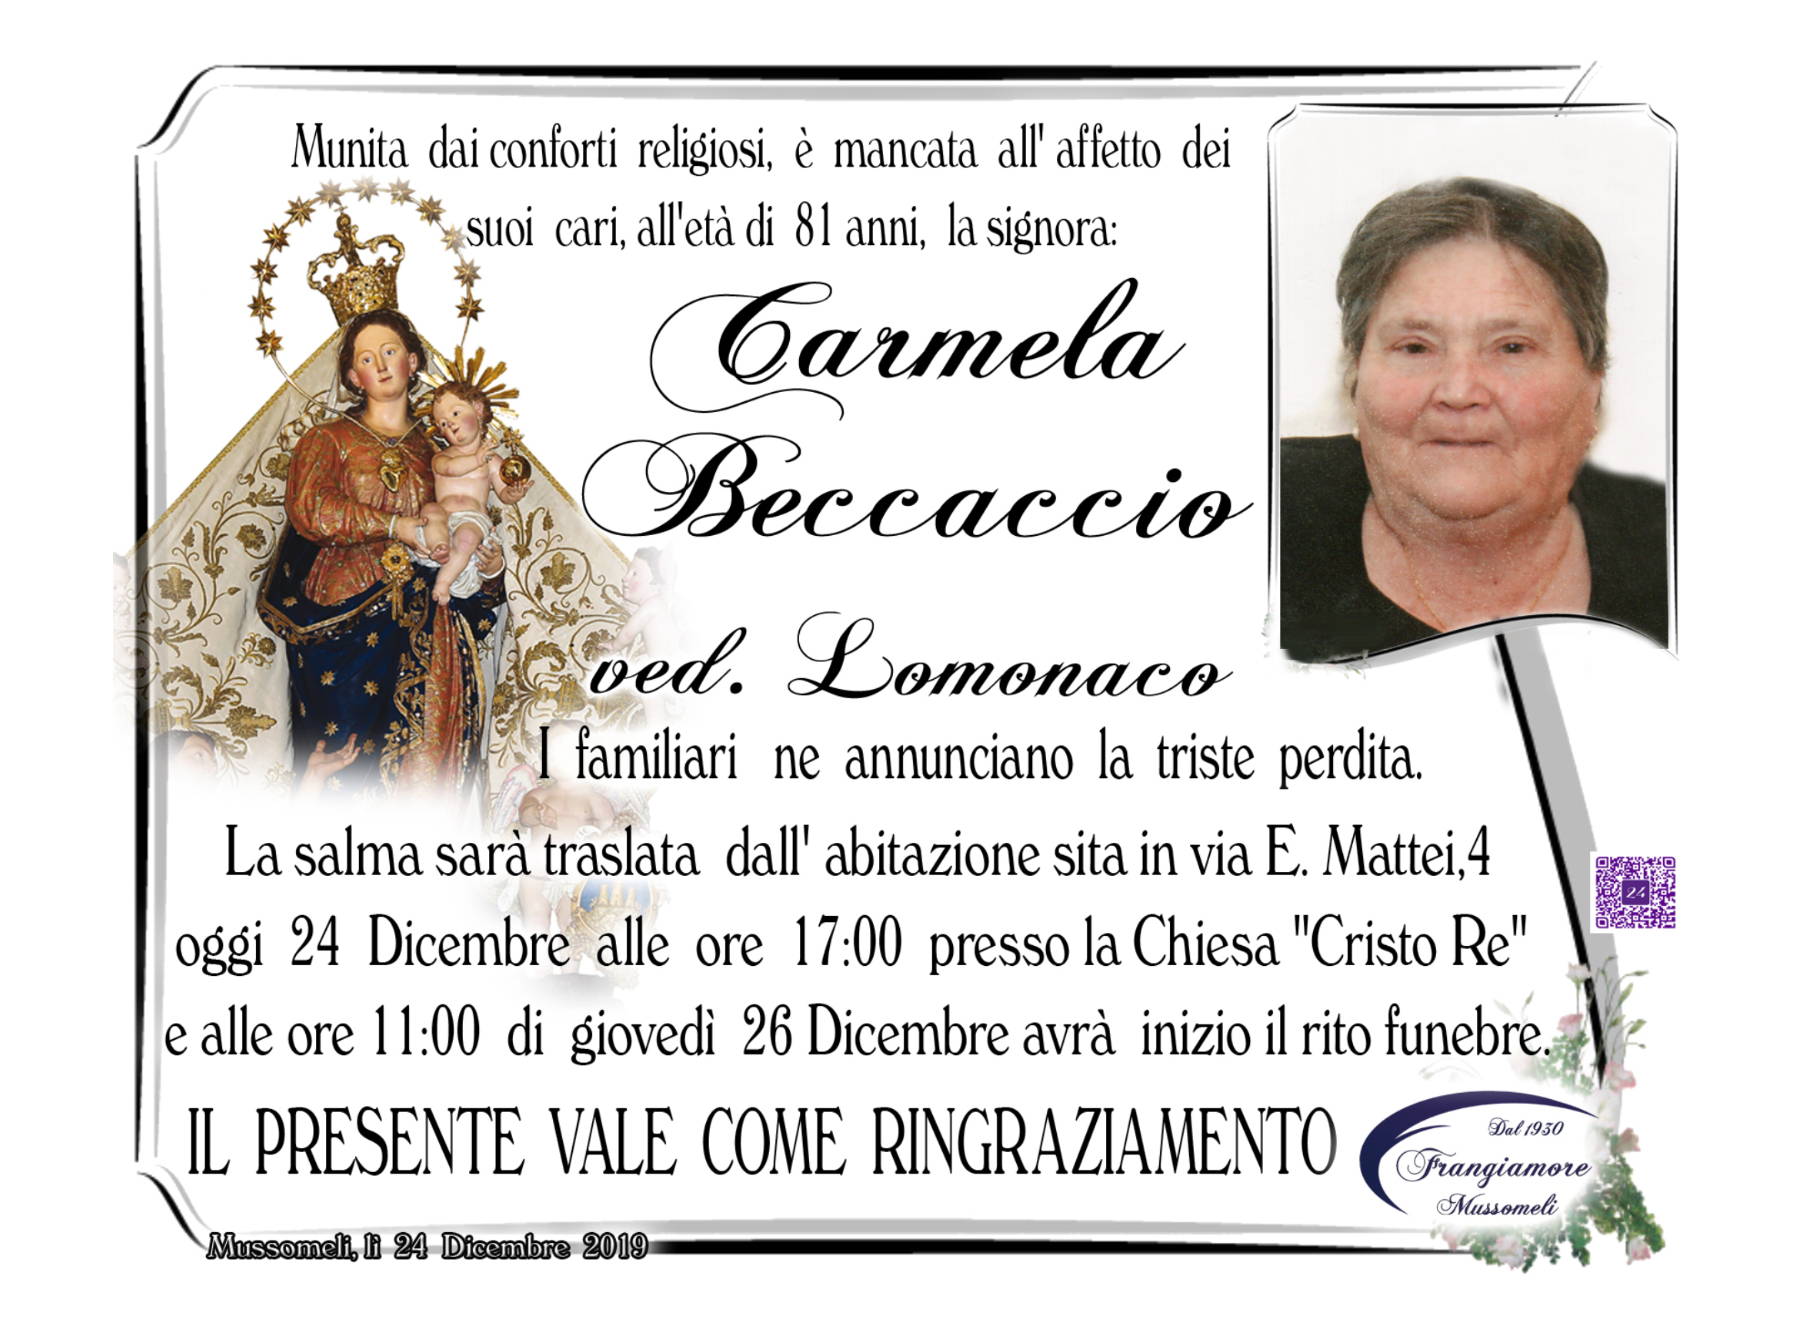 Carmela Beccaccio